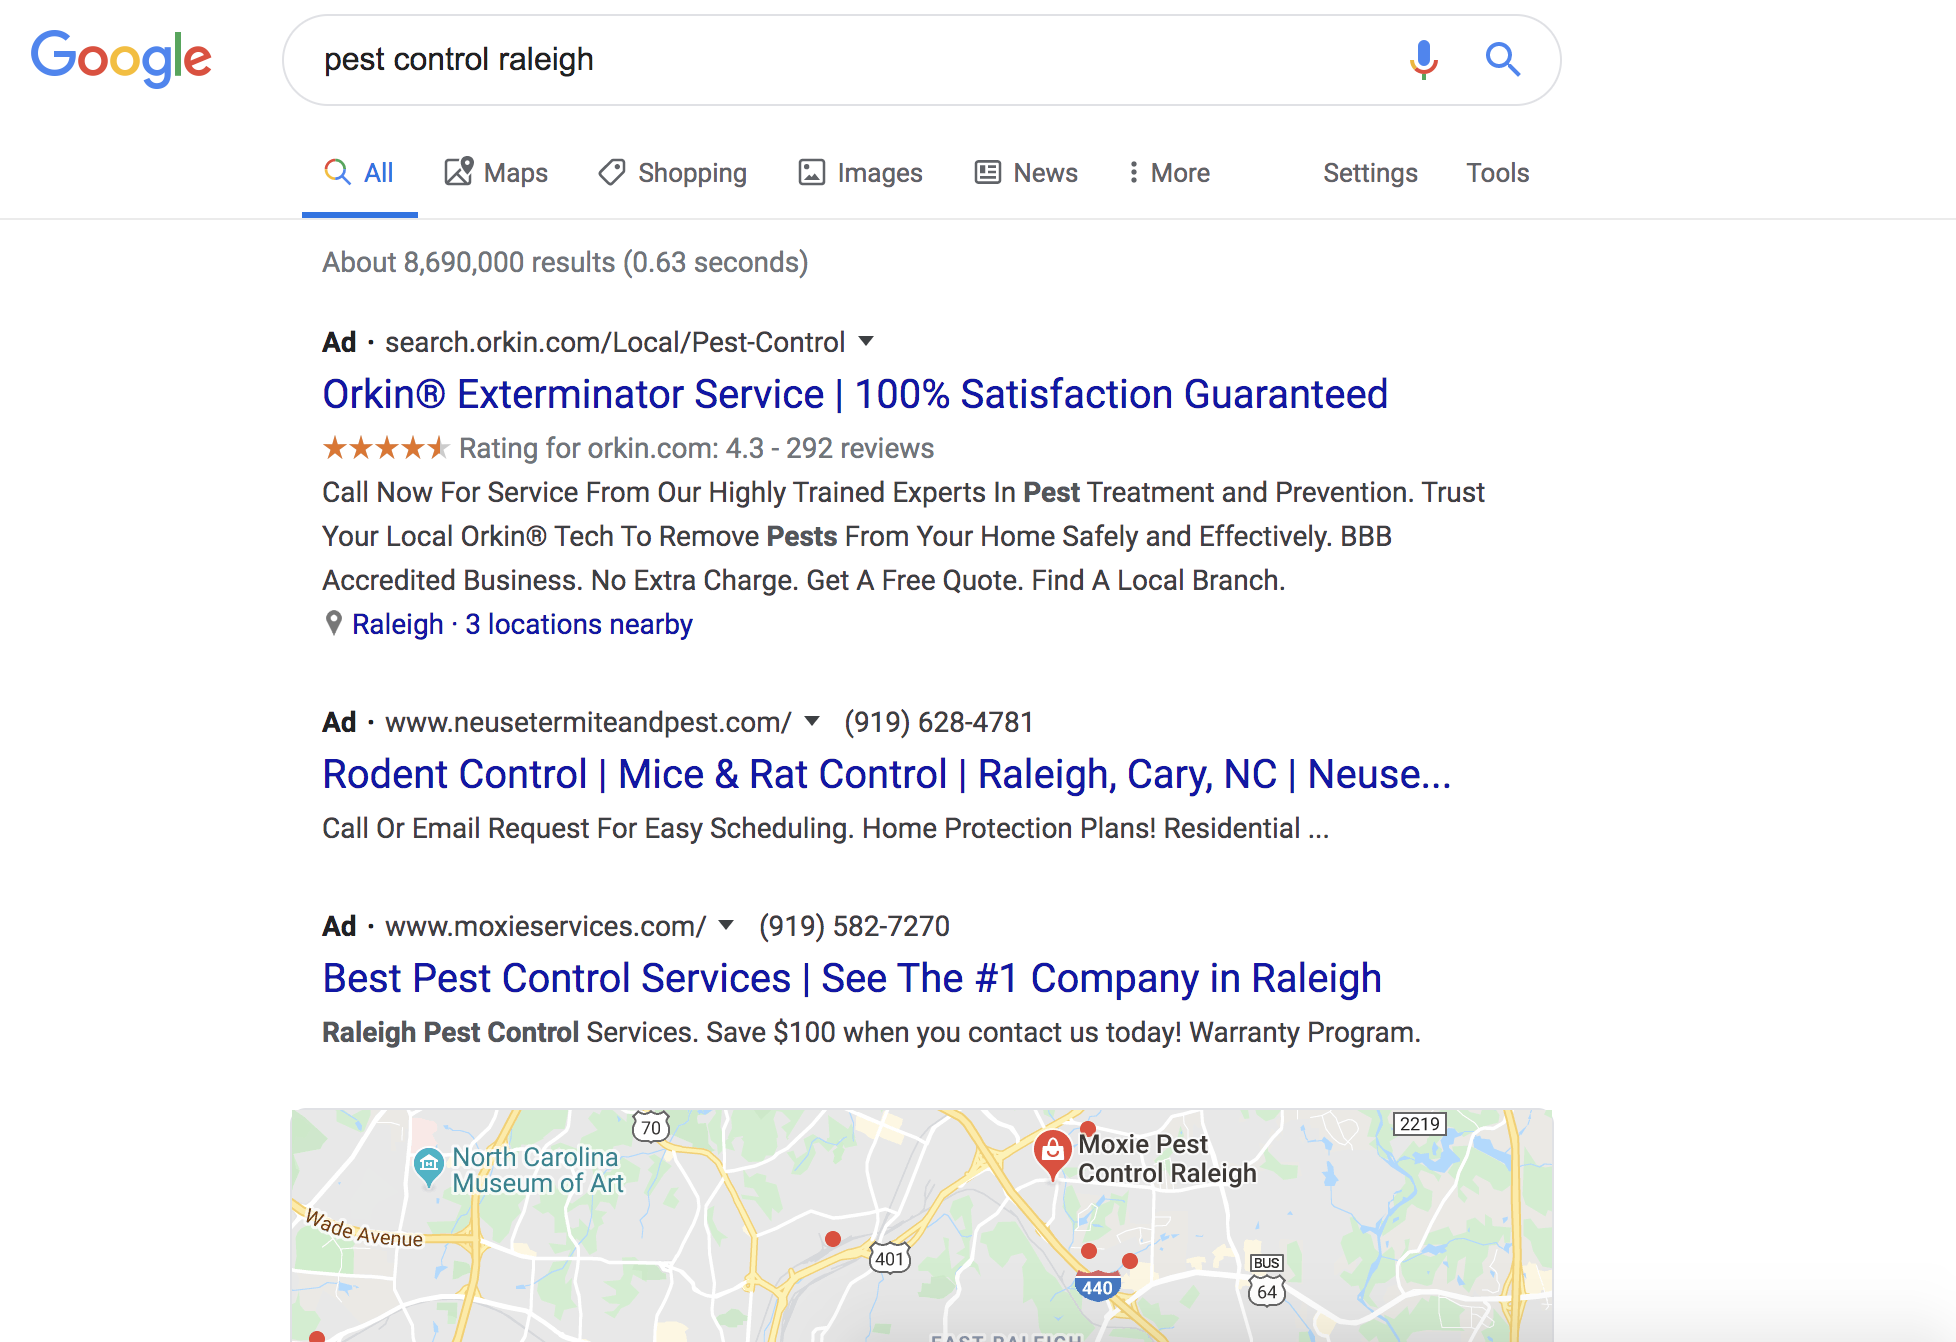 Pest Control Raleigh, Google search screenshot Feb 2020